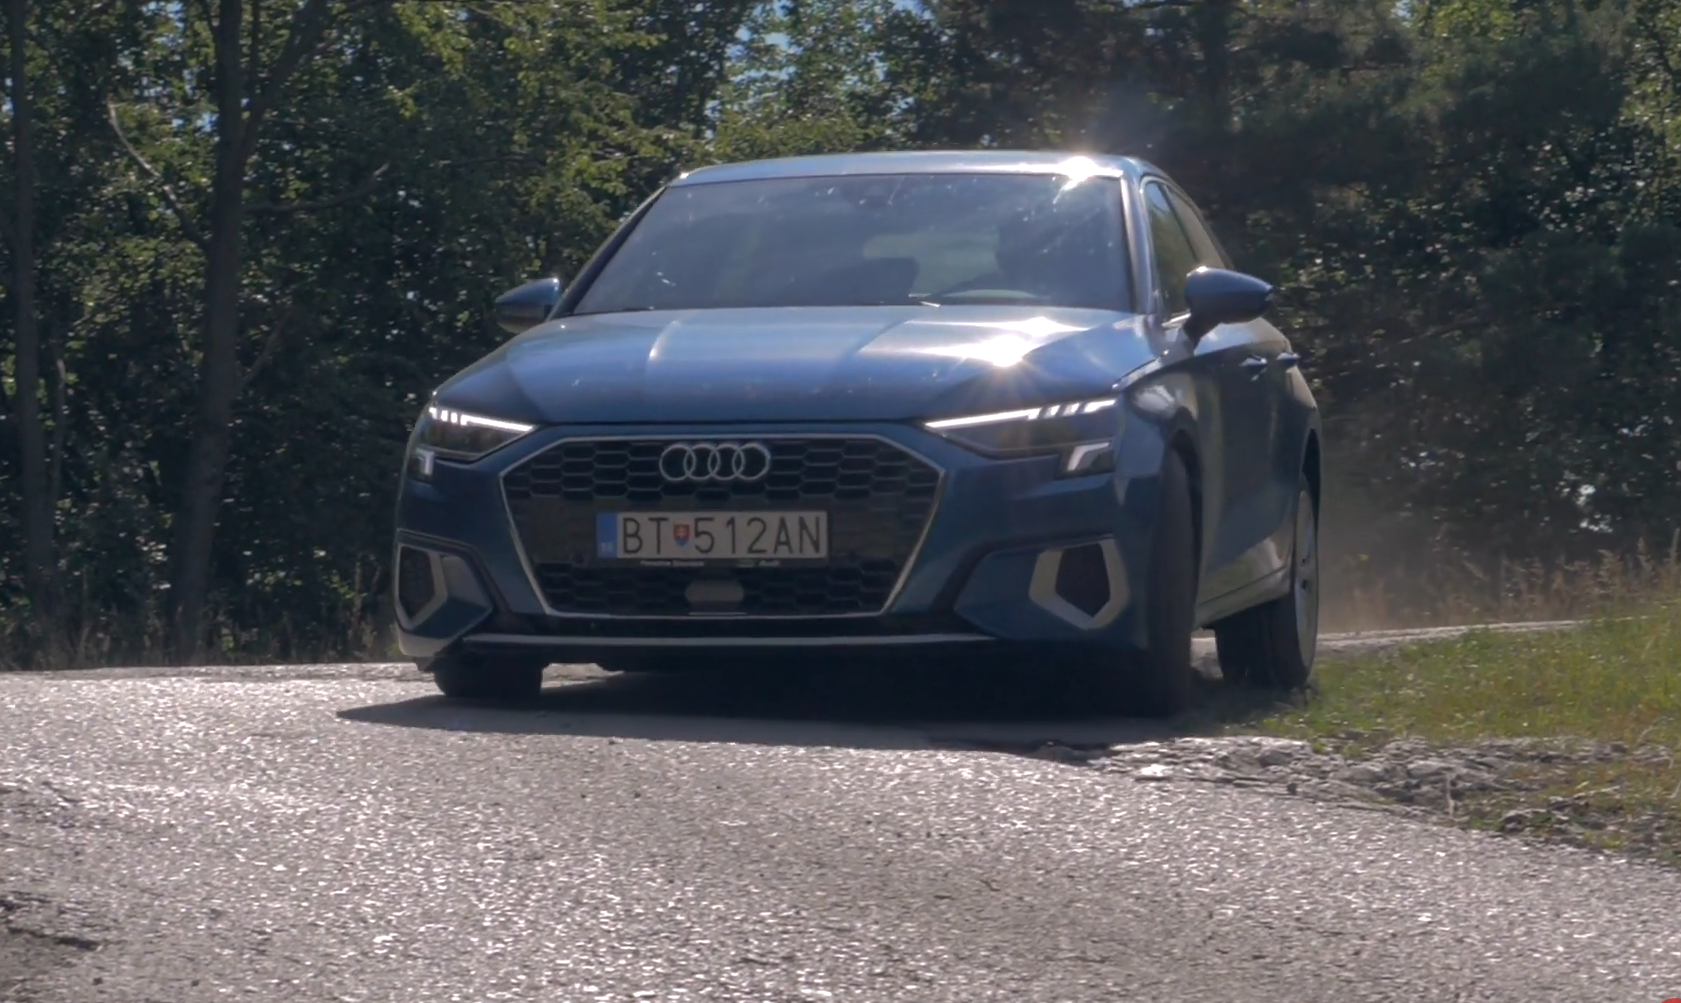 Audi A3 Sportback zaujalo podvozkom, priestorom nesklamalo